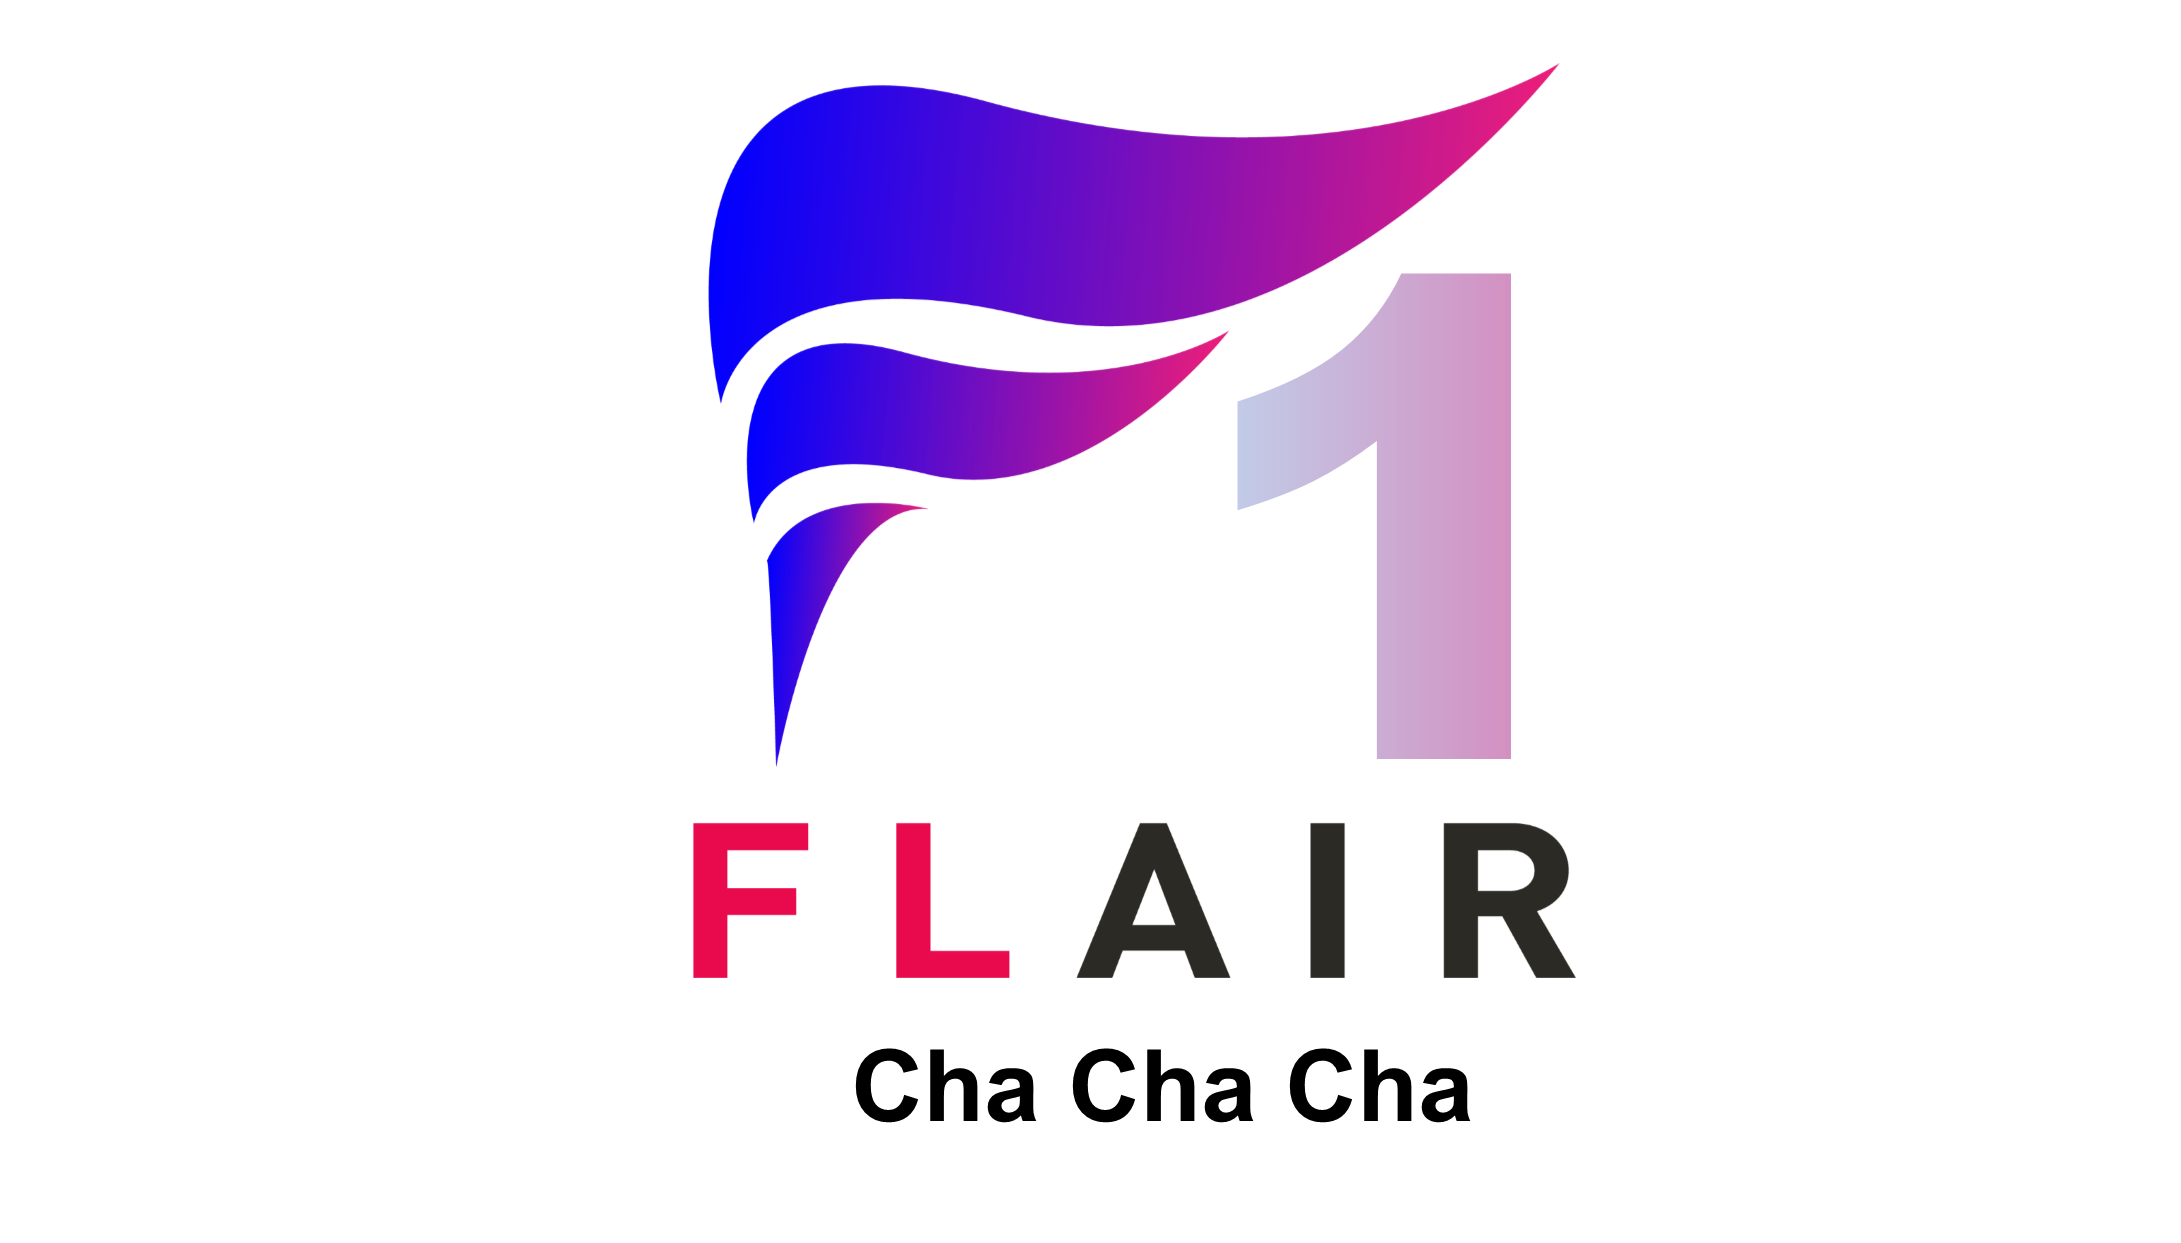 Flair 1 - Cha Cha Cha (Moves 1-4)